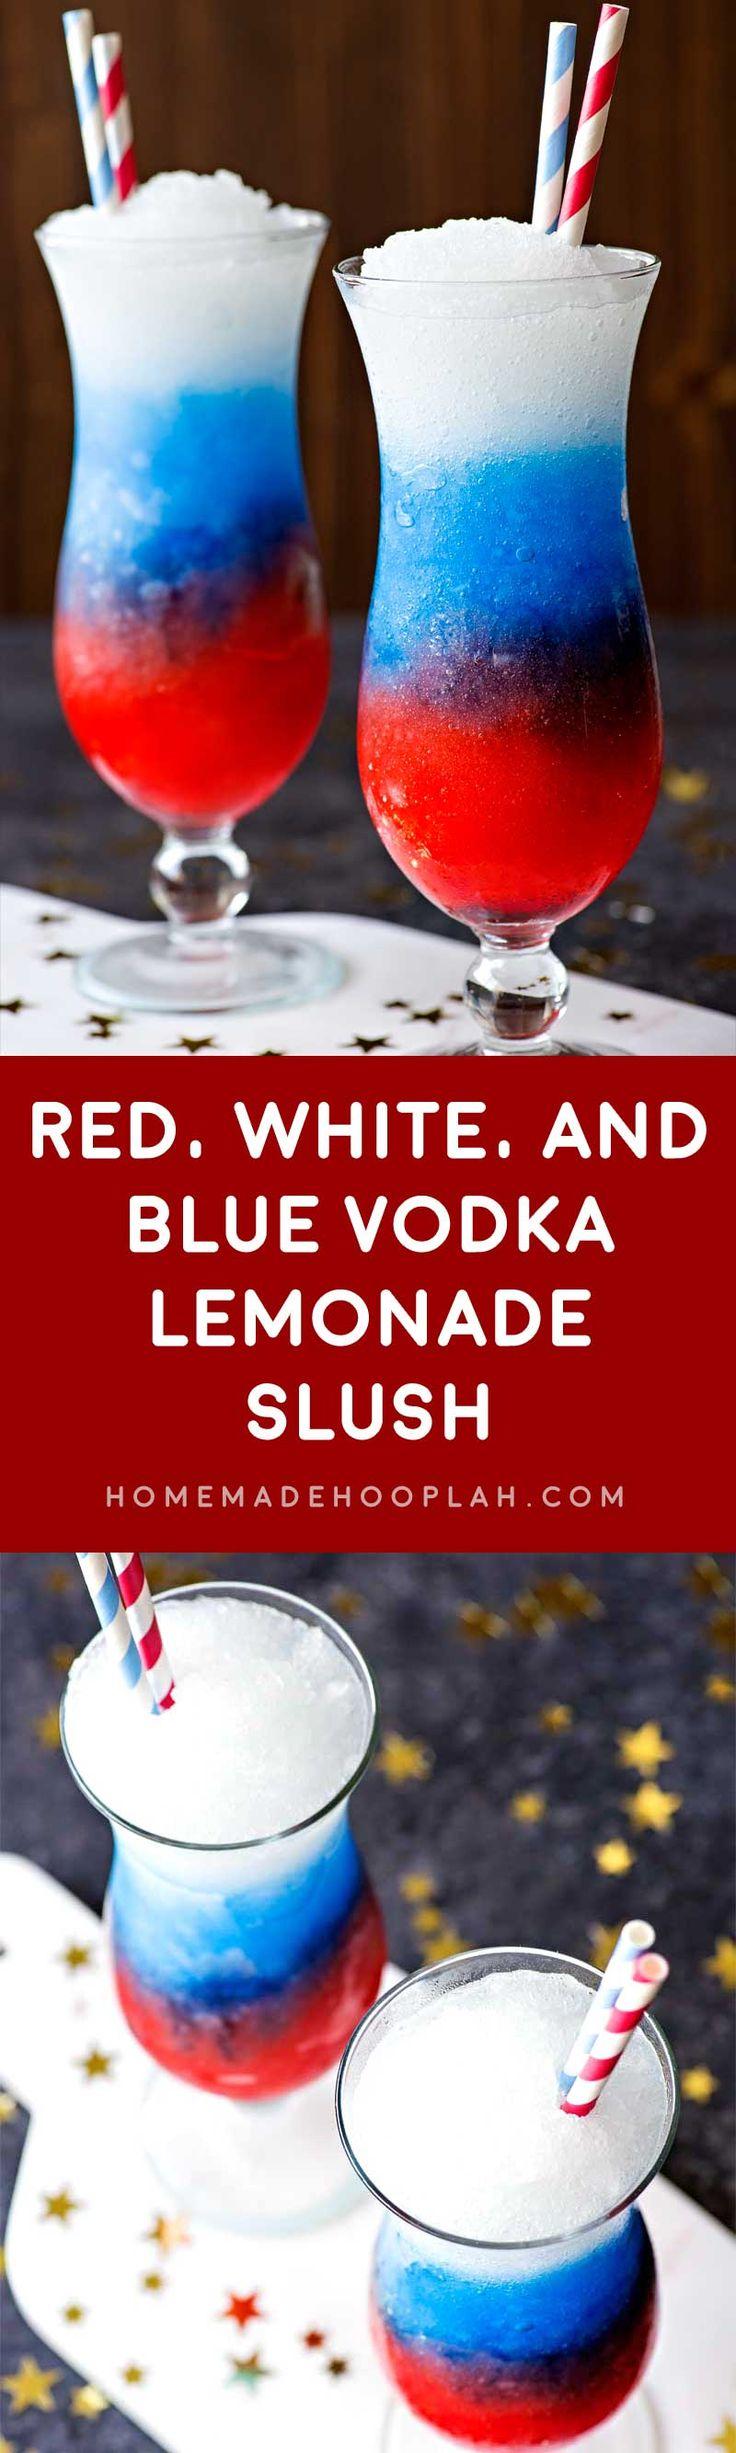 Wedding - Red, White, And Blue Vodka Lemonade Slush